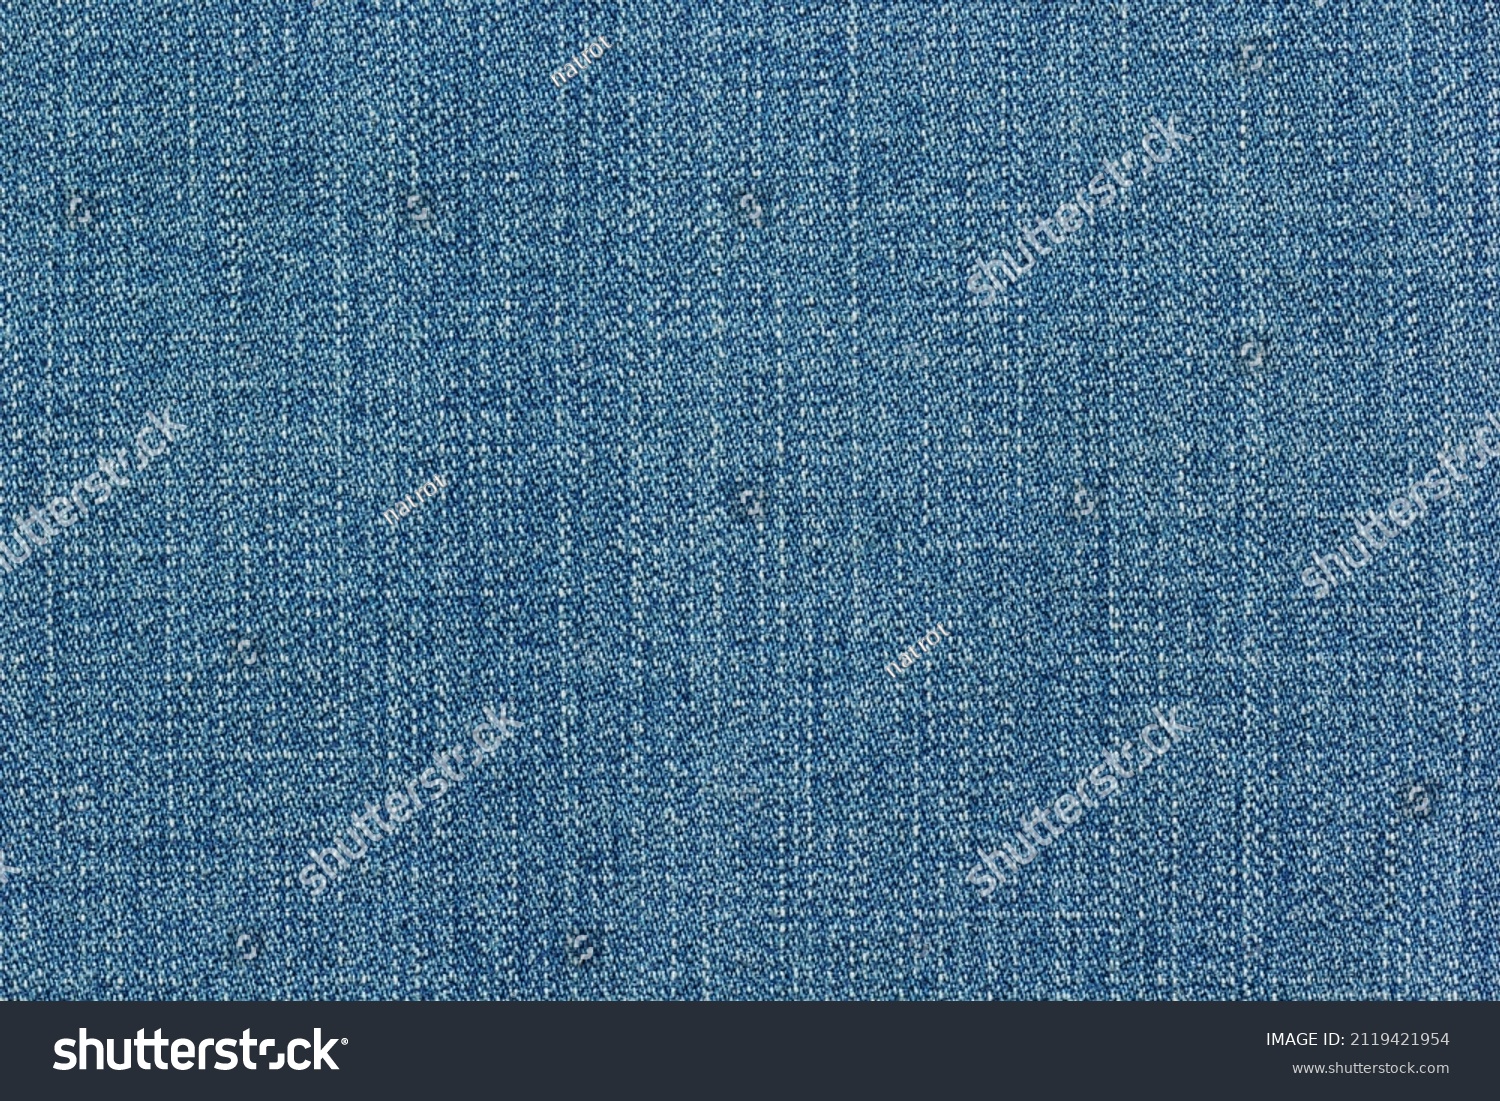 Blue Jean Fabric Texture Background Stock Photo 2119421954 | Shutterstock